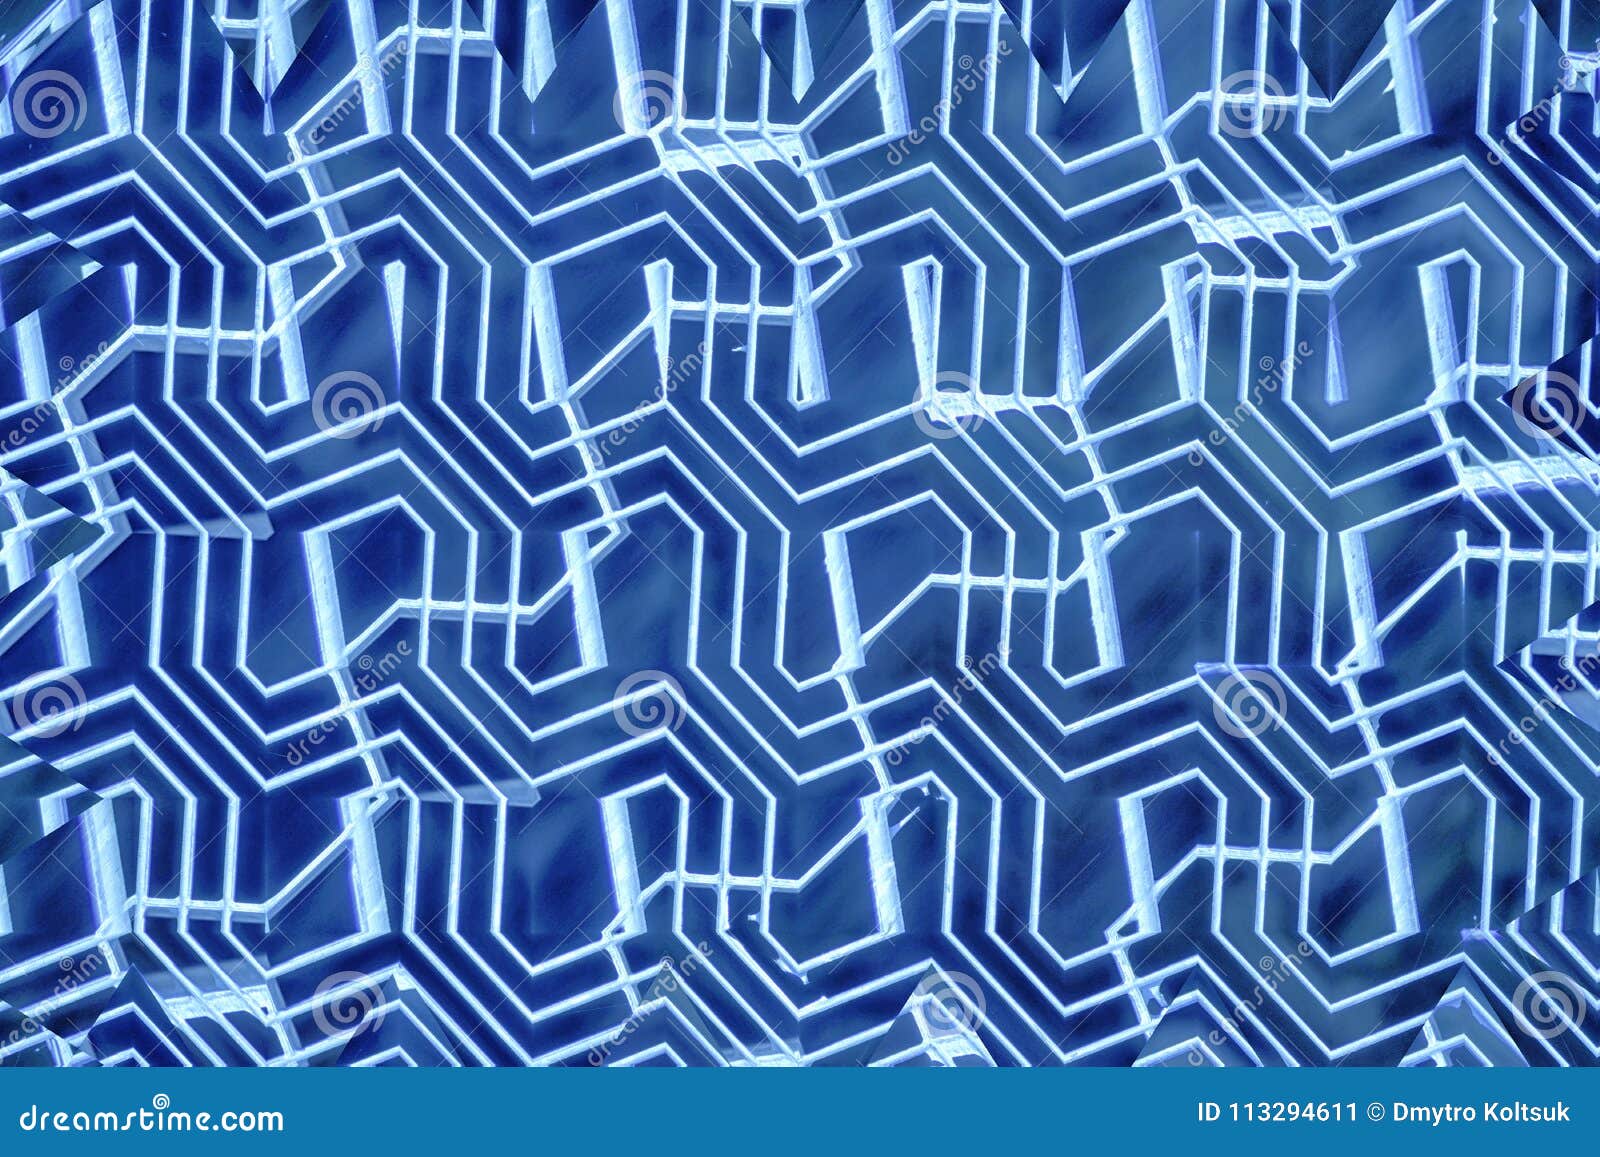 ion fabric texture, futuristic textile background in marina color